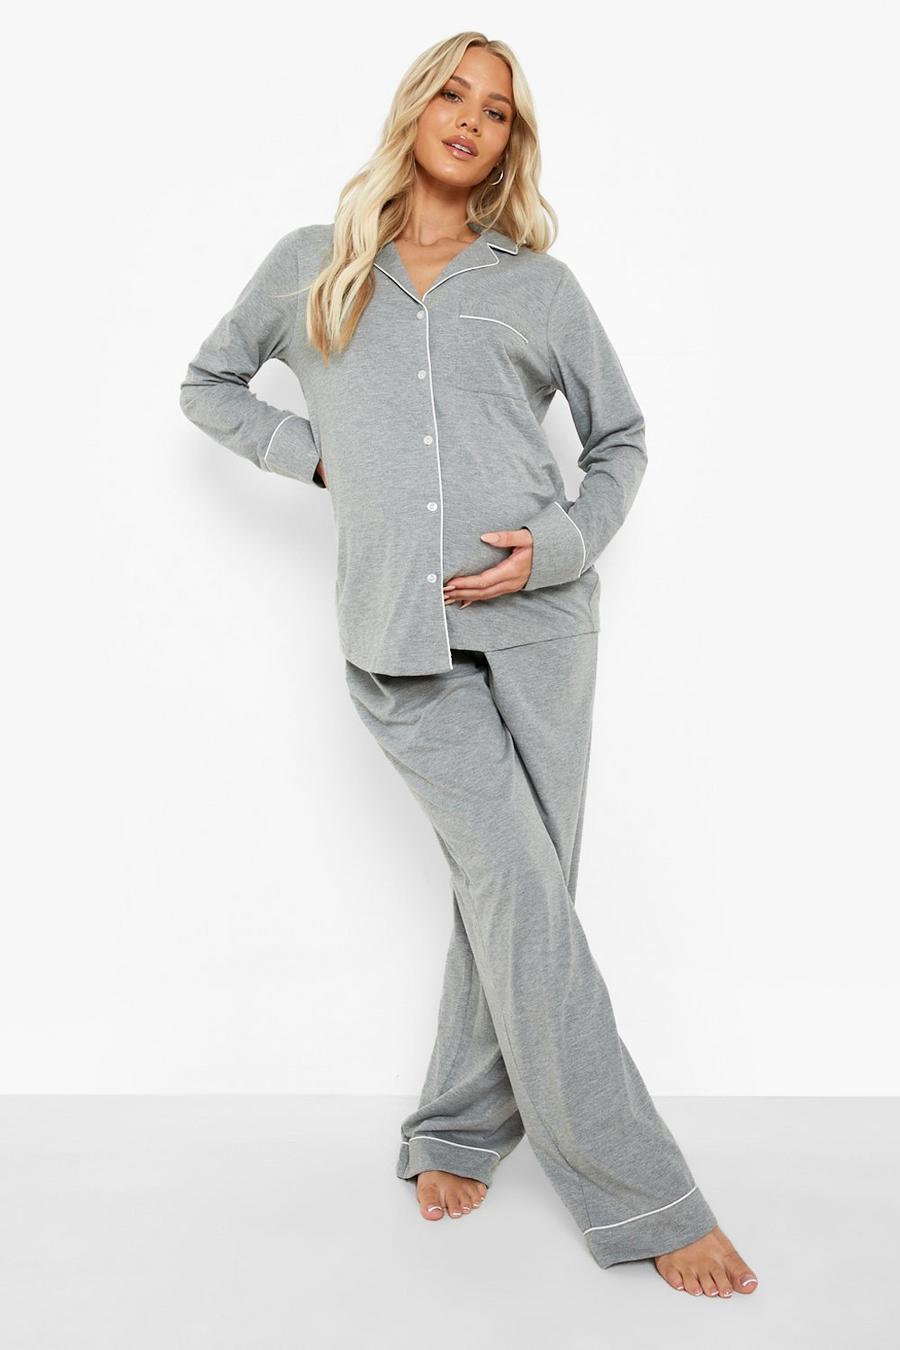 Umstandsmode Jersey Pyjama-Set, Grau meliert grey